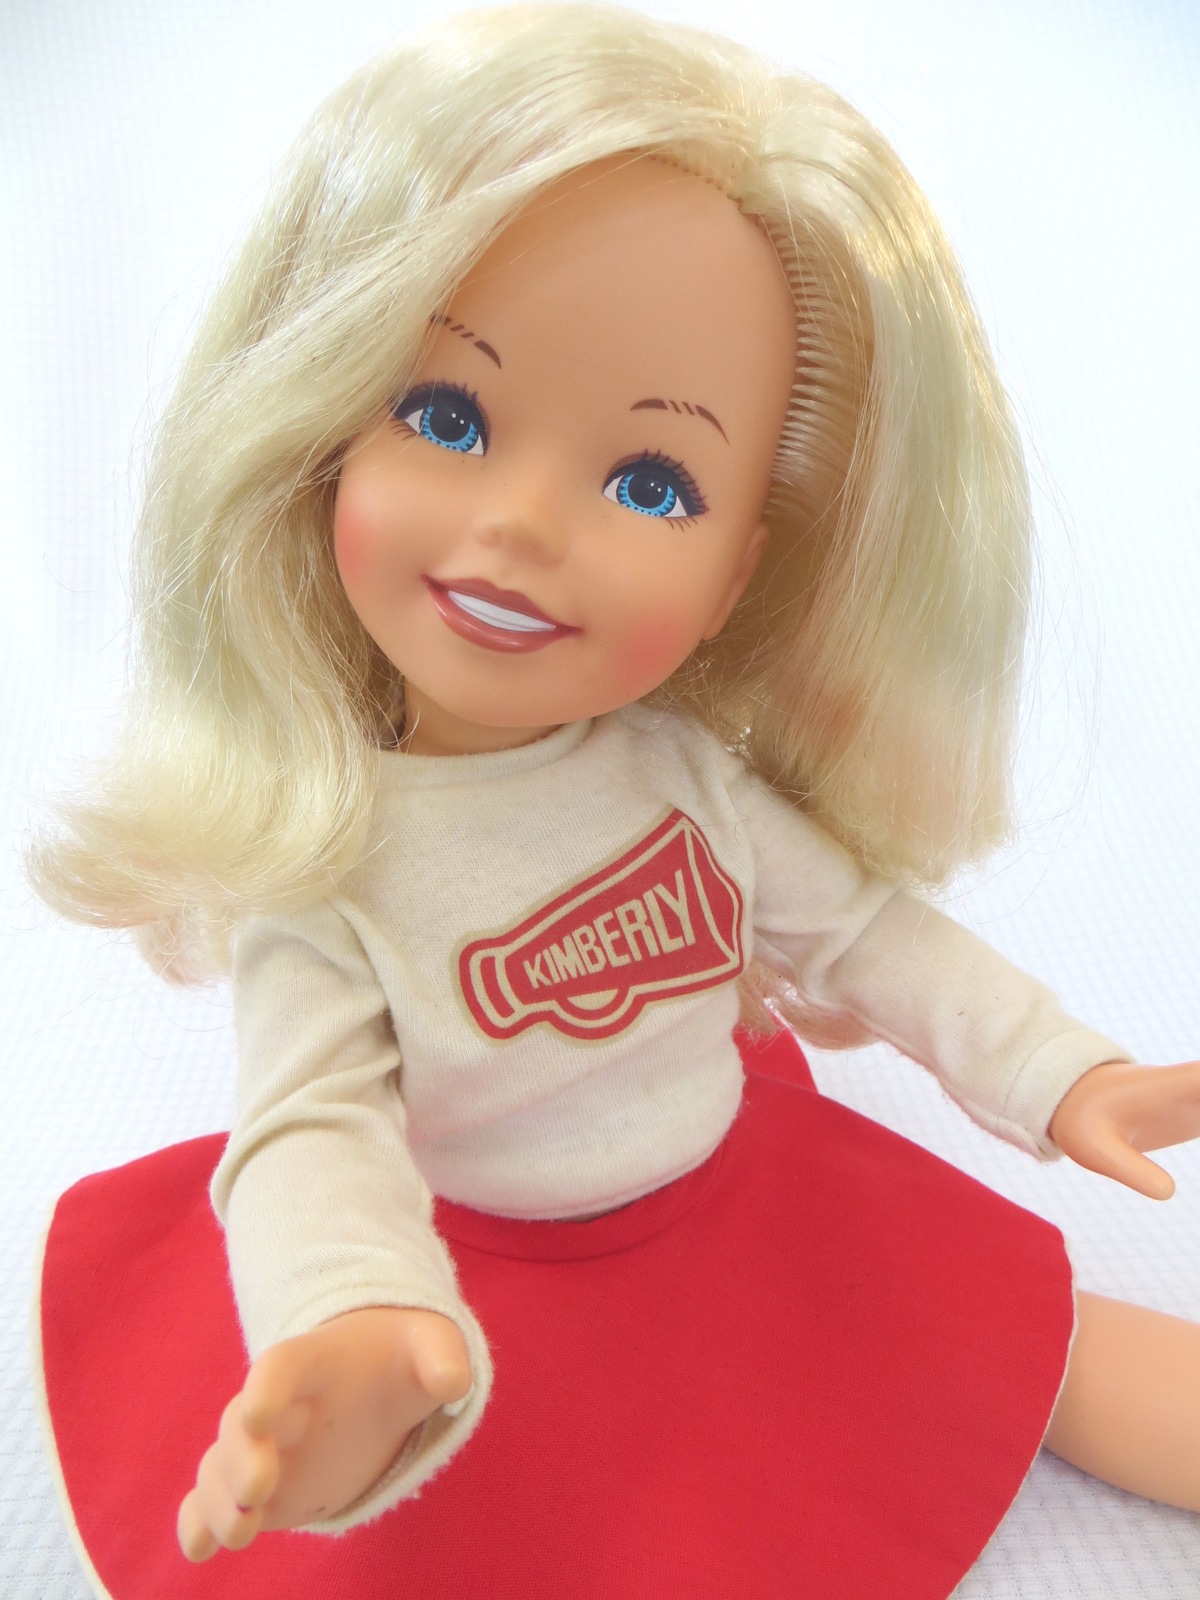 Vintage Tomy Cheerleader Kimberly Doll 17" 1983 Like Hasbro My Beautiful Doll  - $22.00